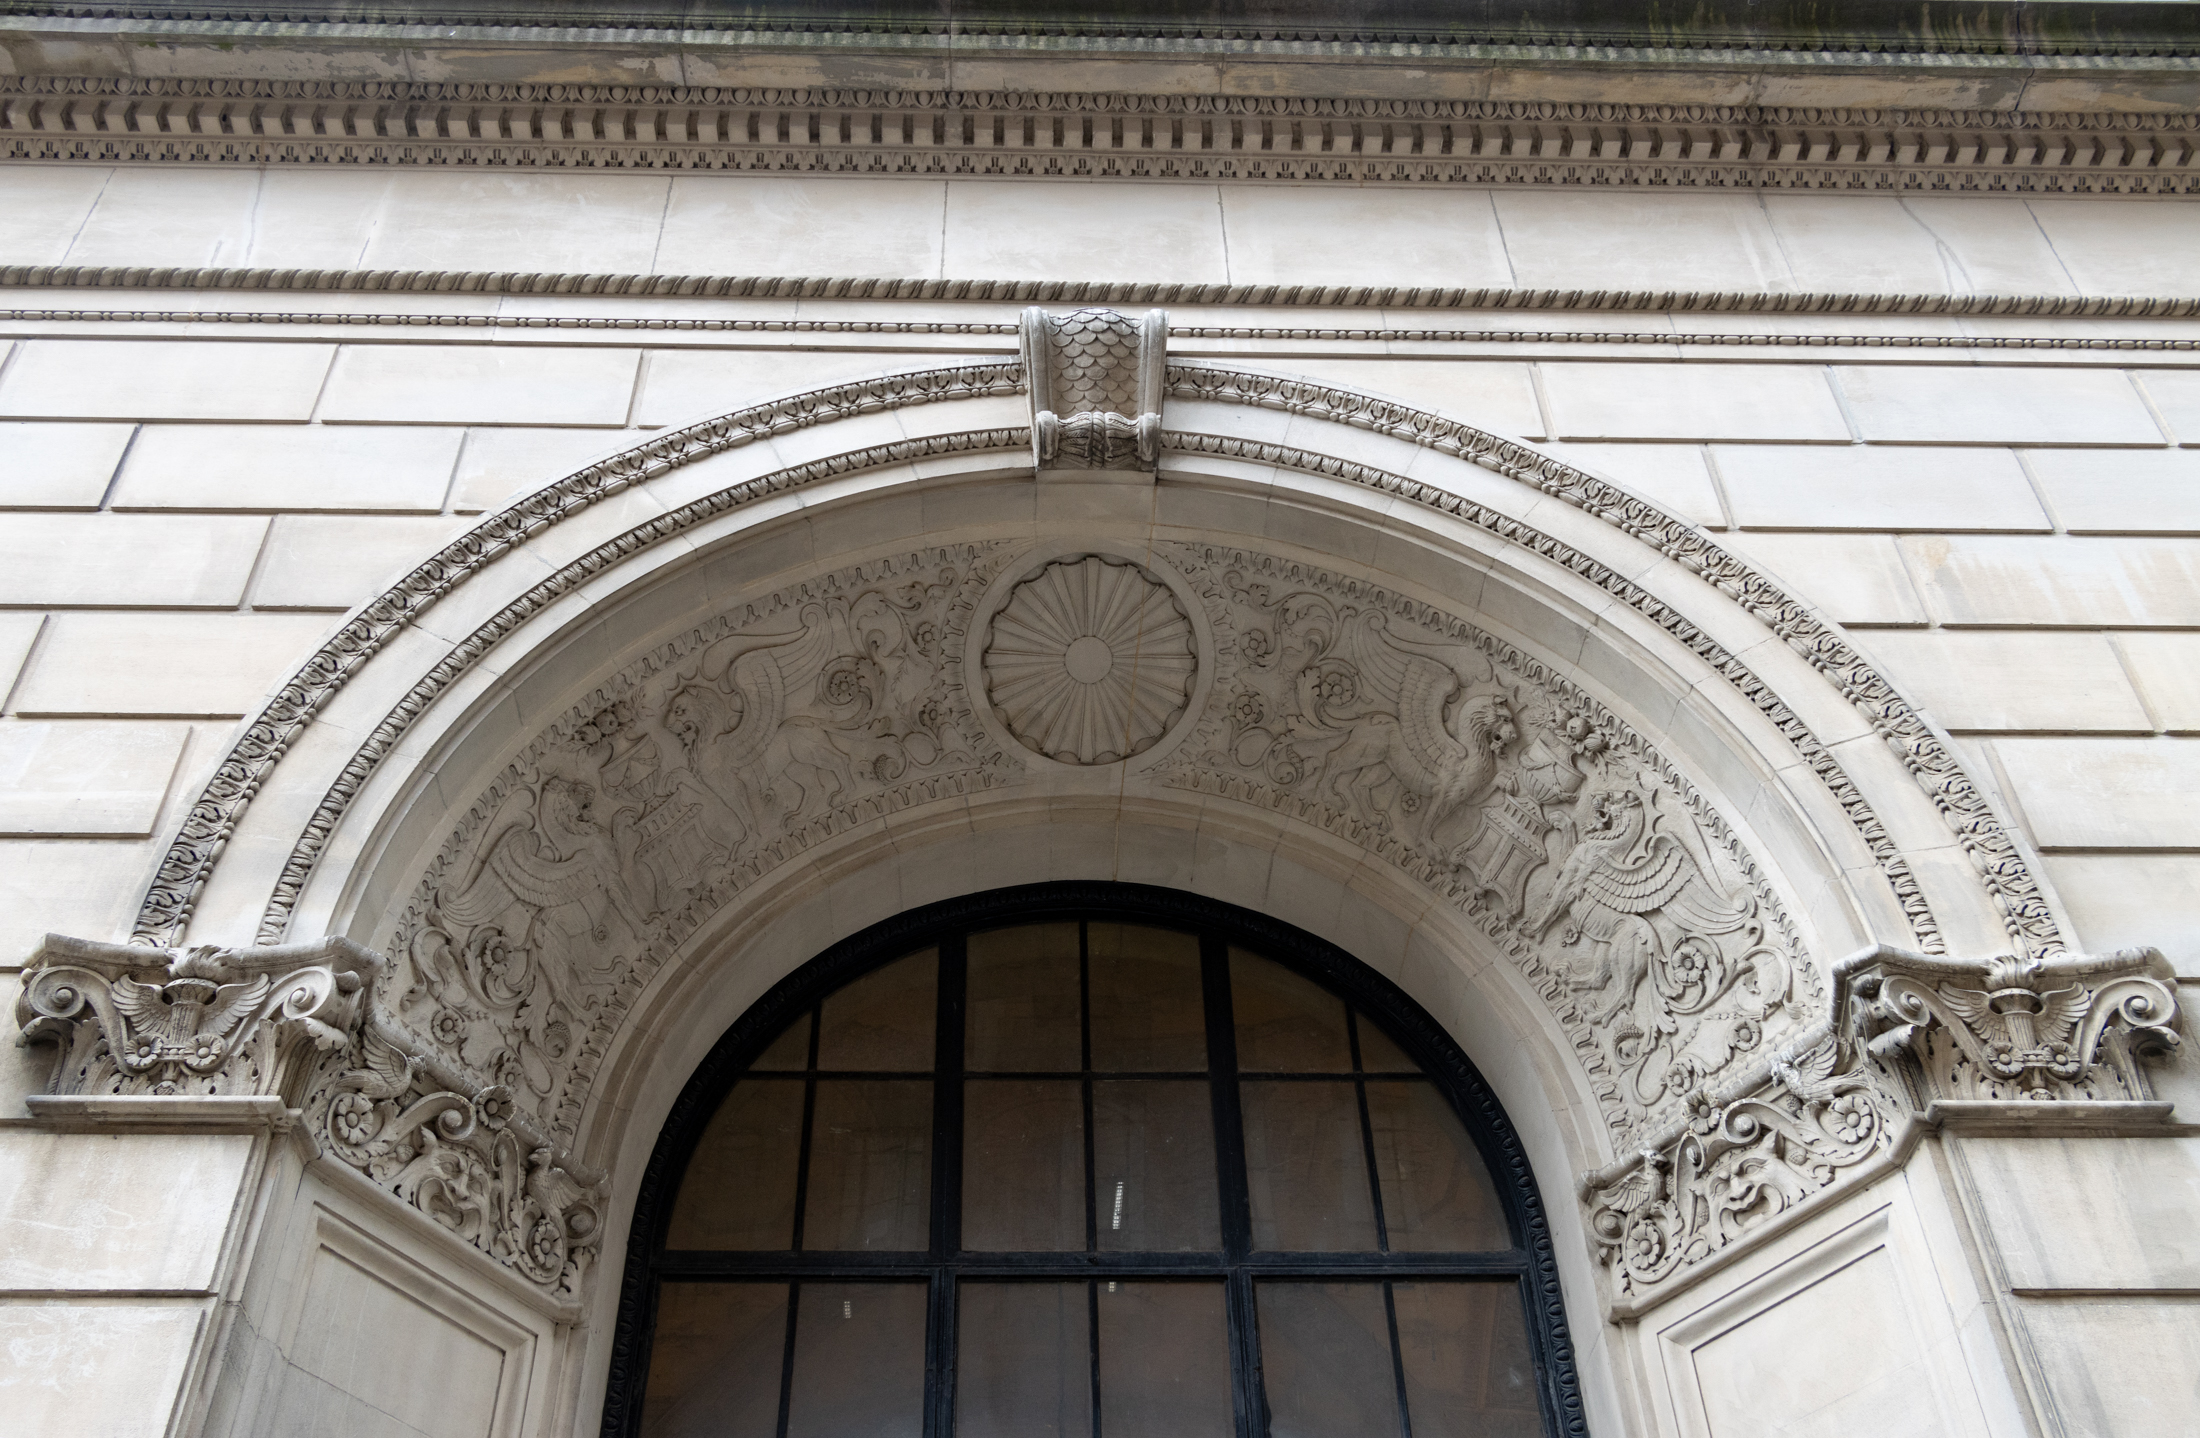 ornamental detail in a doorway with gryphons